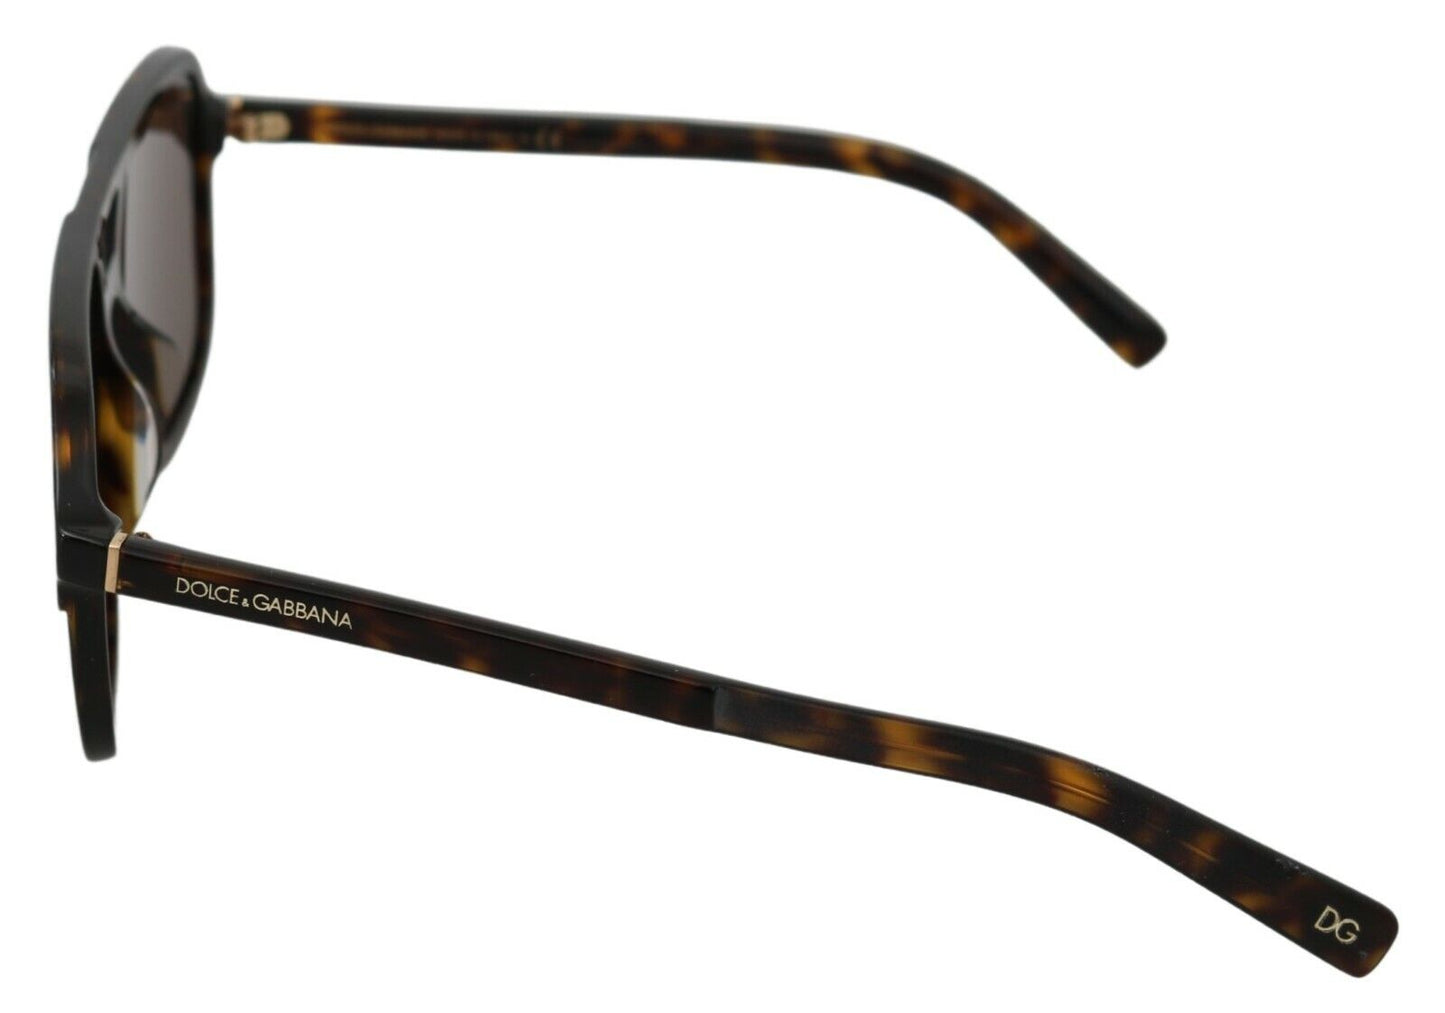 Dolce & Gabbana Brown Leopard Muster Aviator Pilotmenschen Sonnenbrille